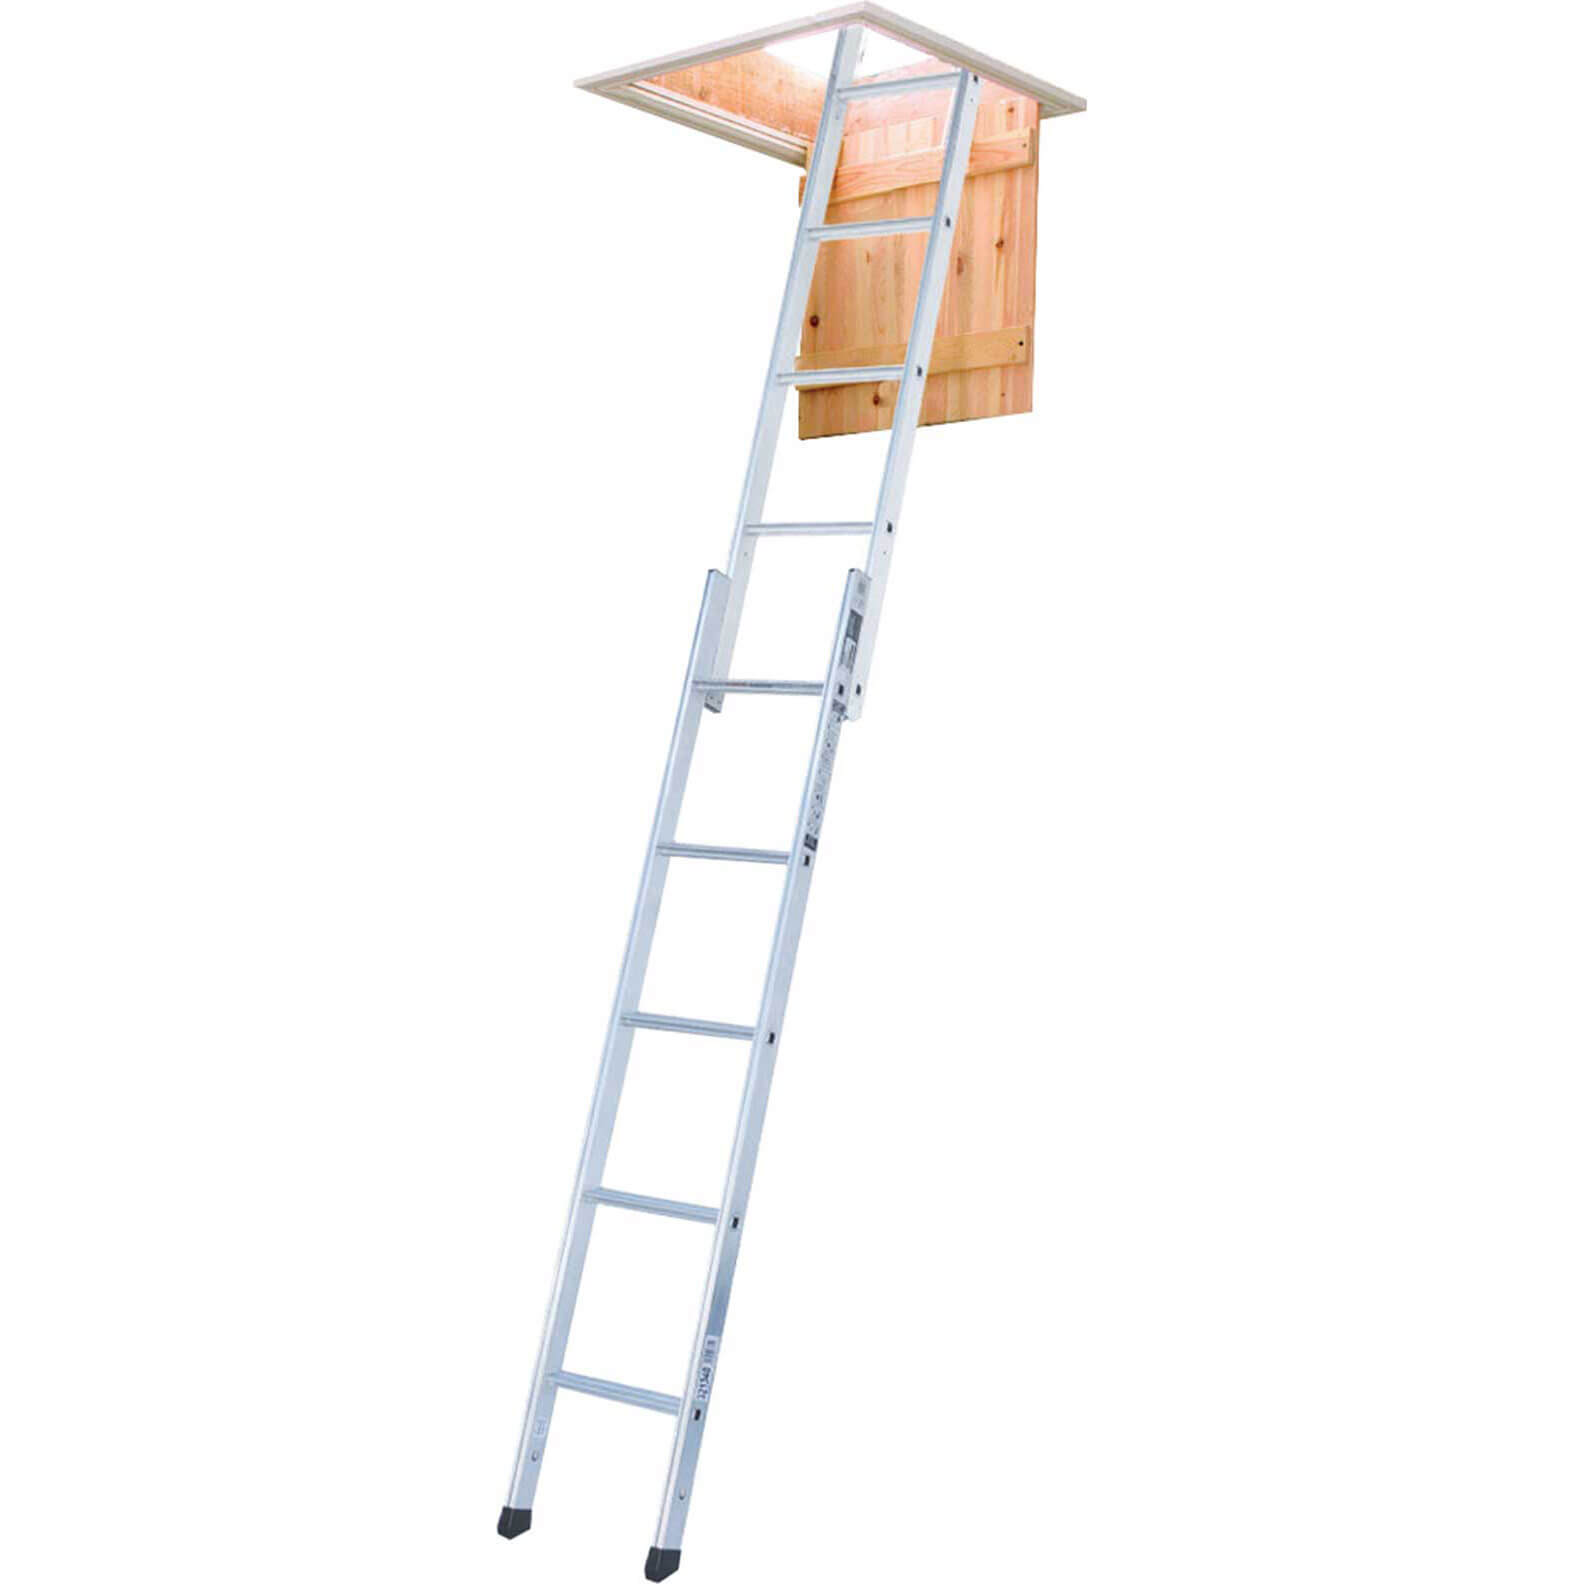 Photos - Ladder Werner SPACEMAKER 2 Section Sliding Loft  2.6m 30234000 